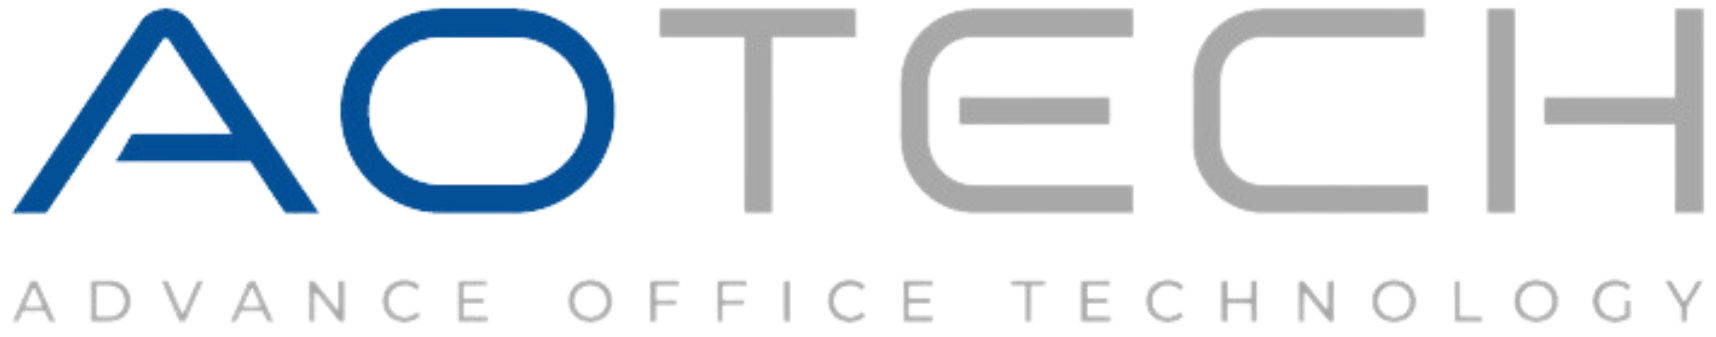 aotech logo